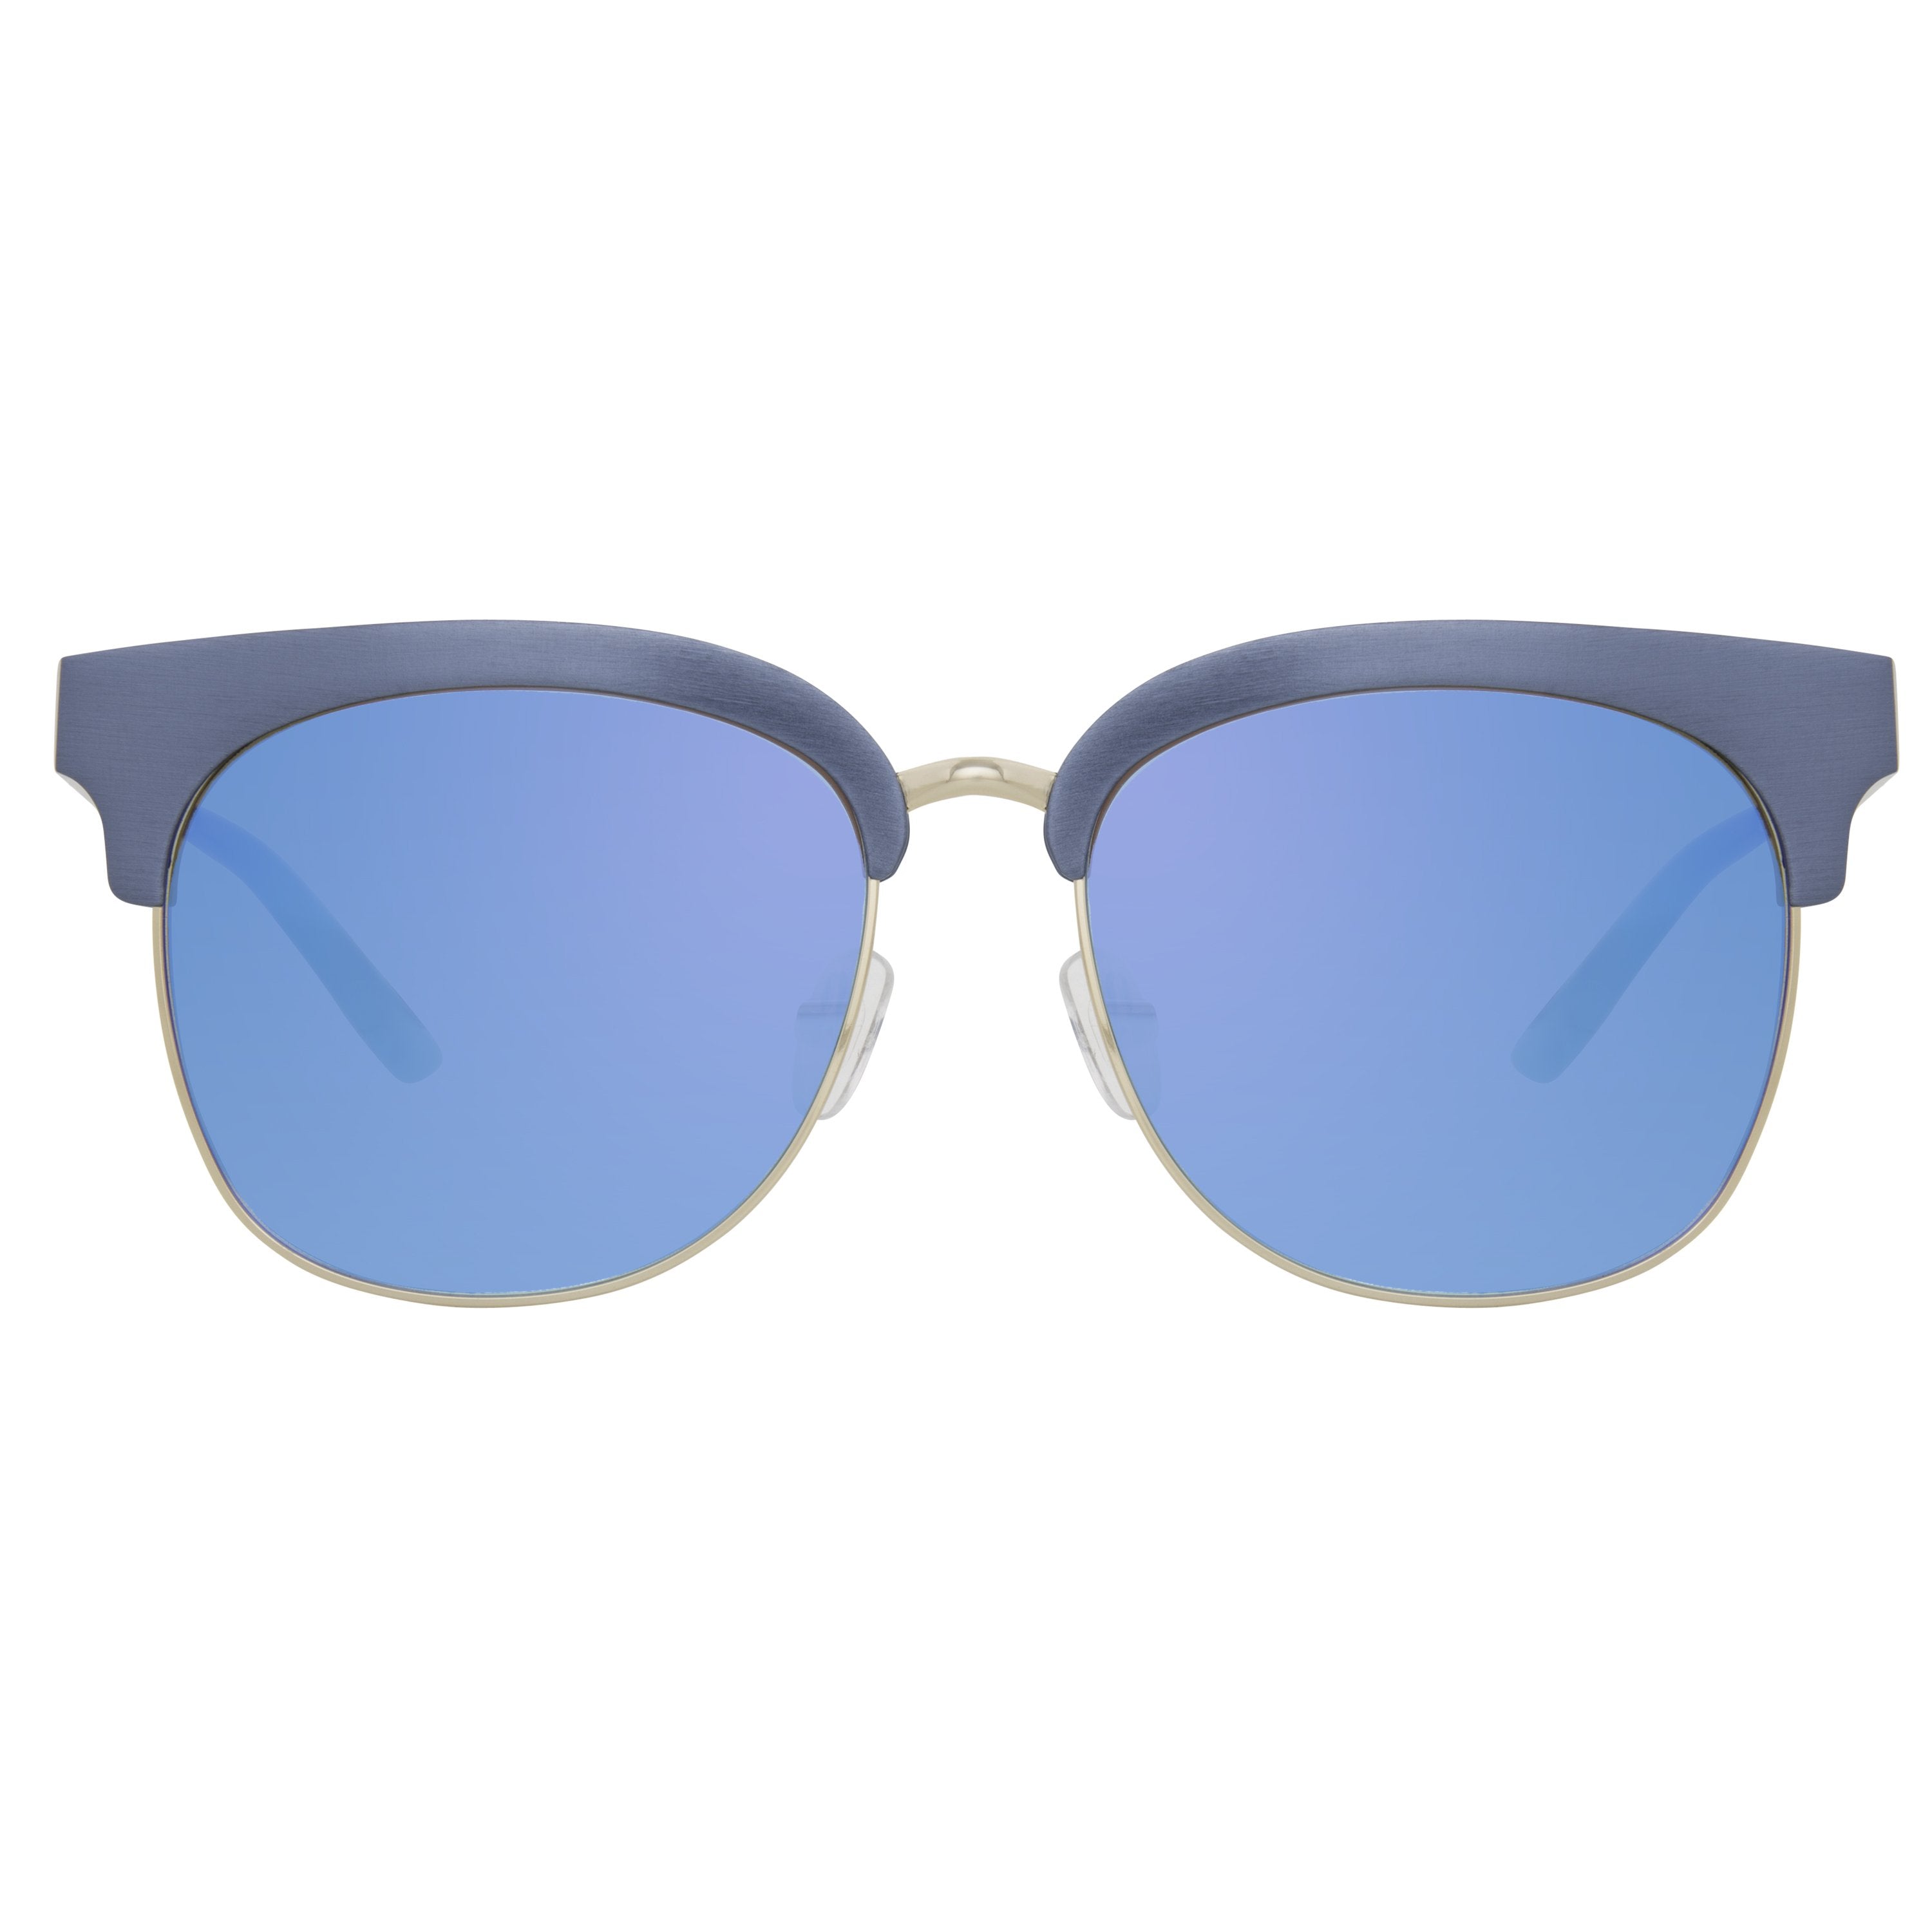 Color_MW167C5SUN - Matthew Williamson 167 C5 D-Frame Sunglasses